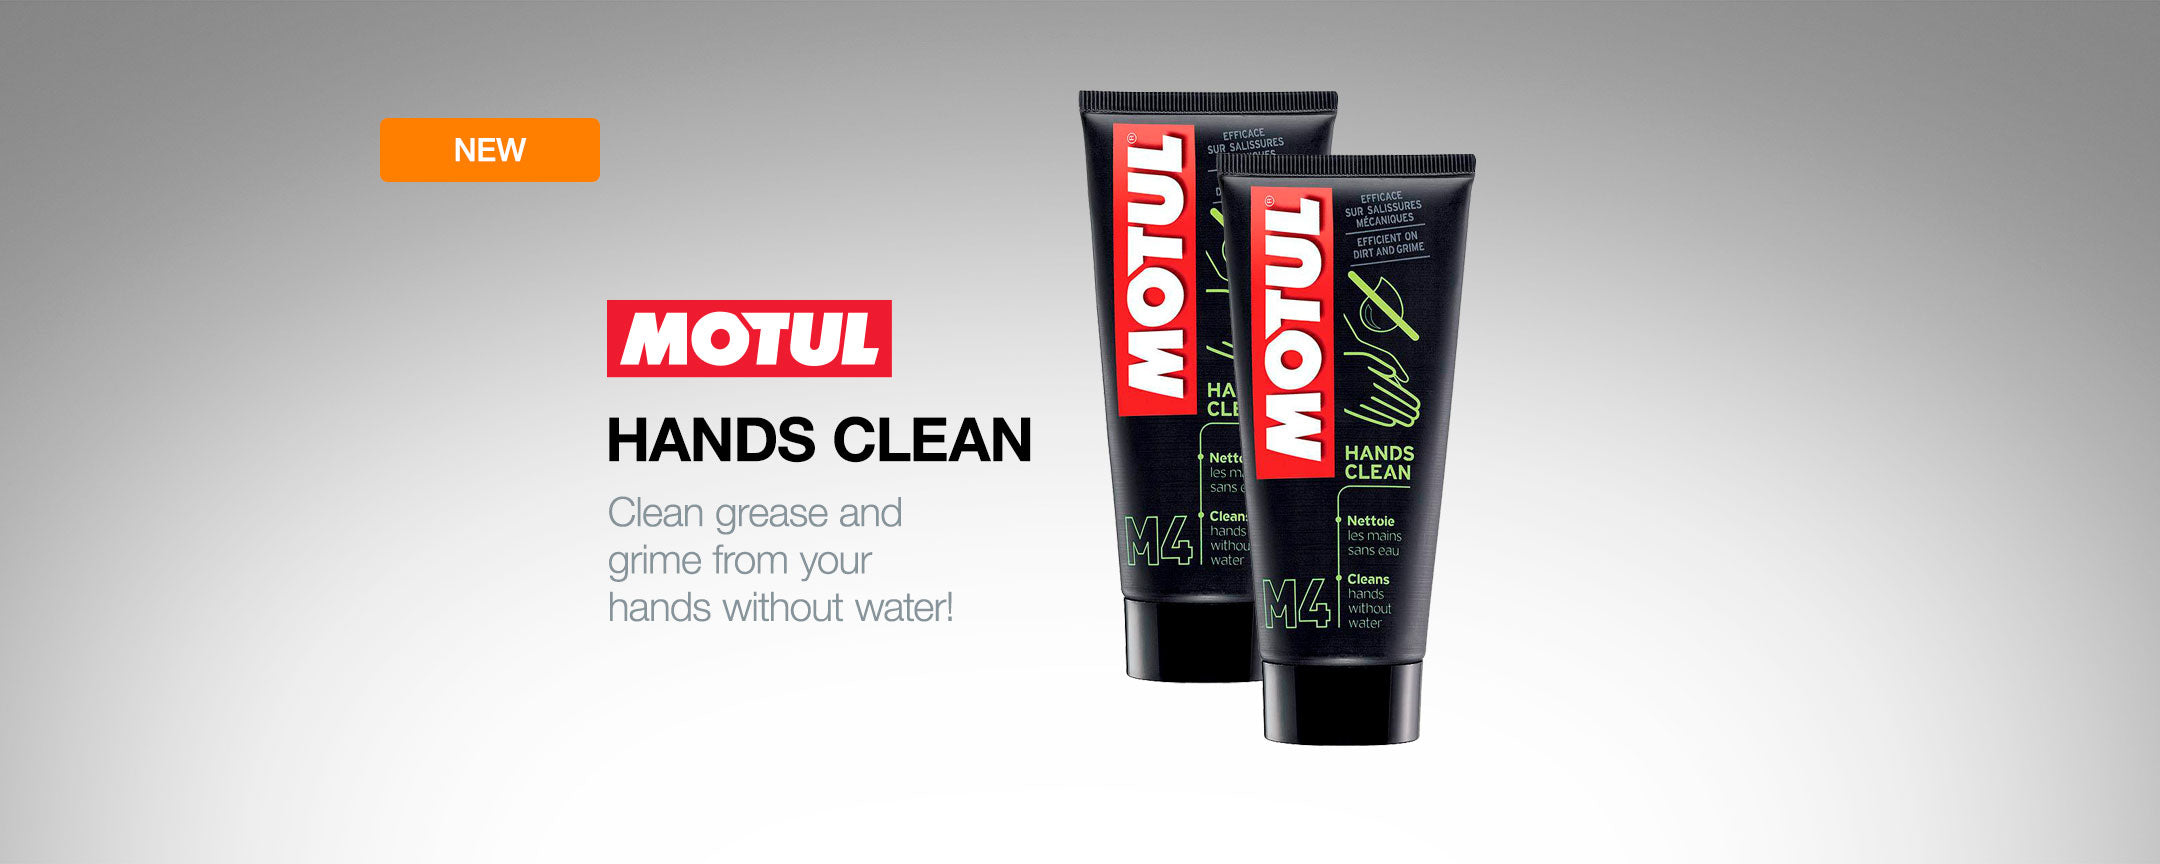 Motul Hands Clean waterless hand cleaner